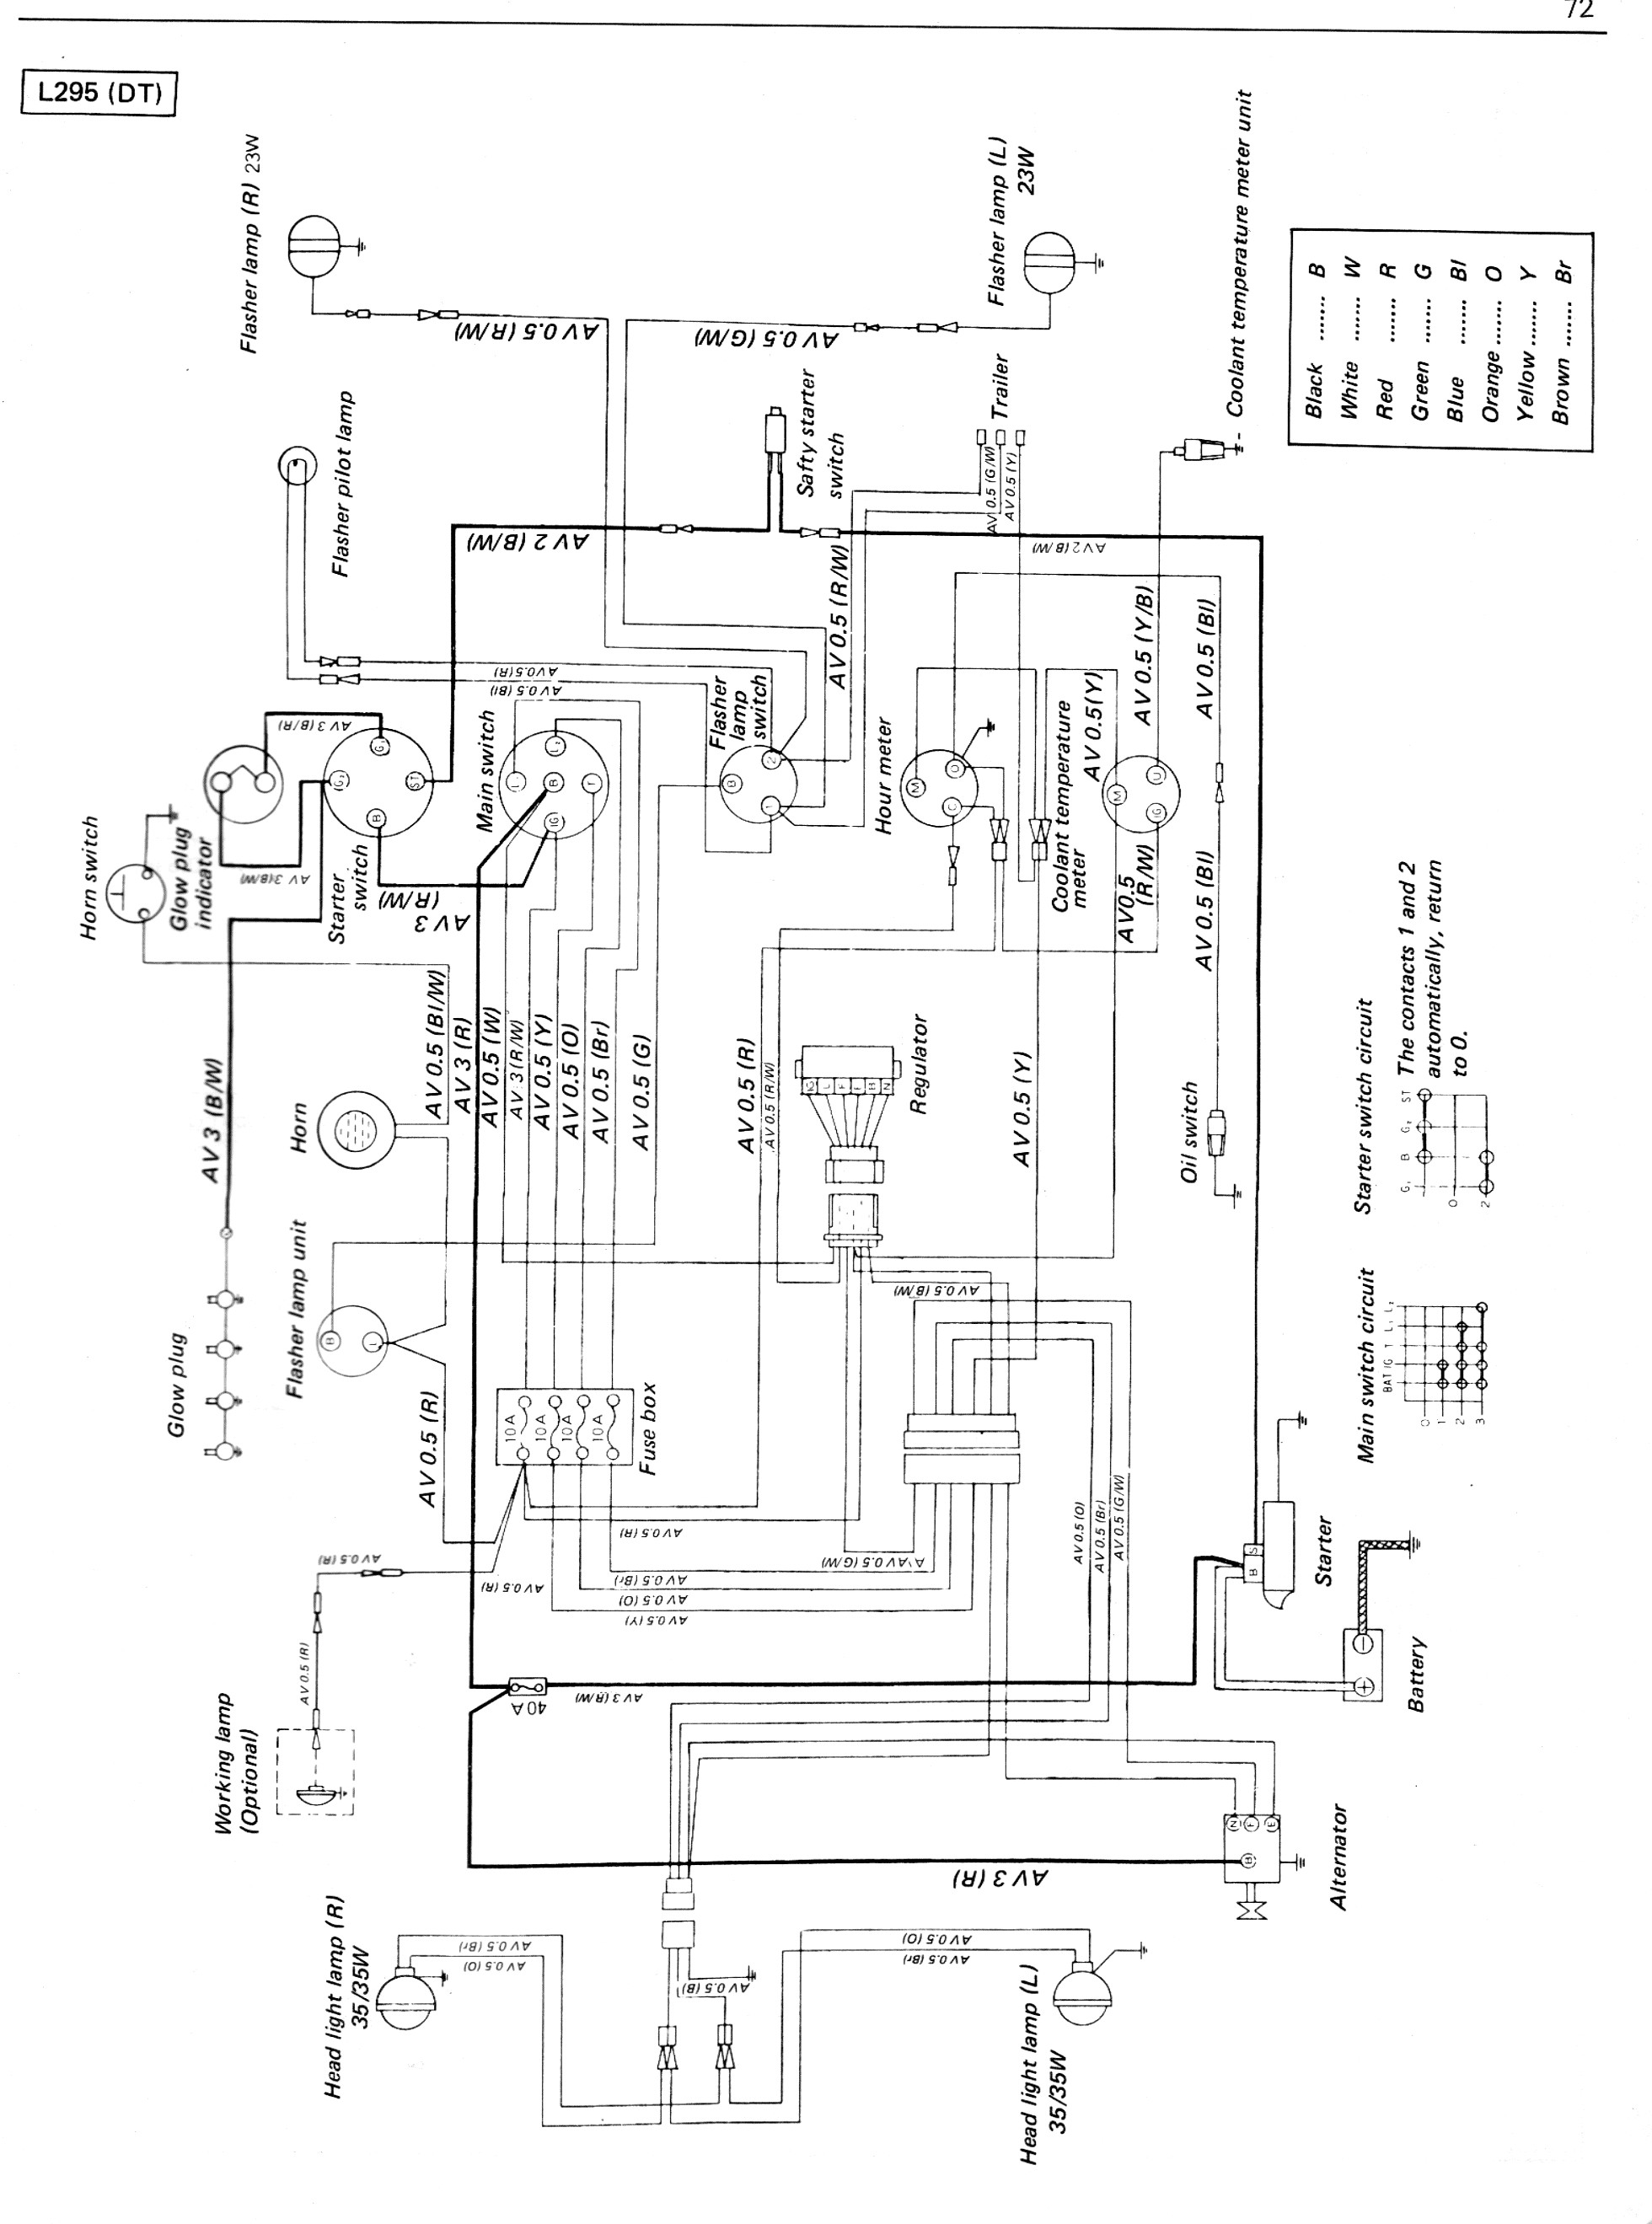 Diesel Engine Alternator Wiring Diagram Voltage Regulator Wiring Diagram Kubota Wiring solutions Of Diesel Engine Alternator Wiring Diagram